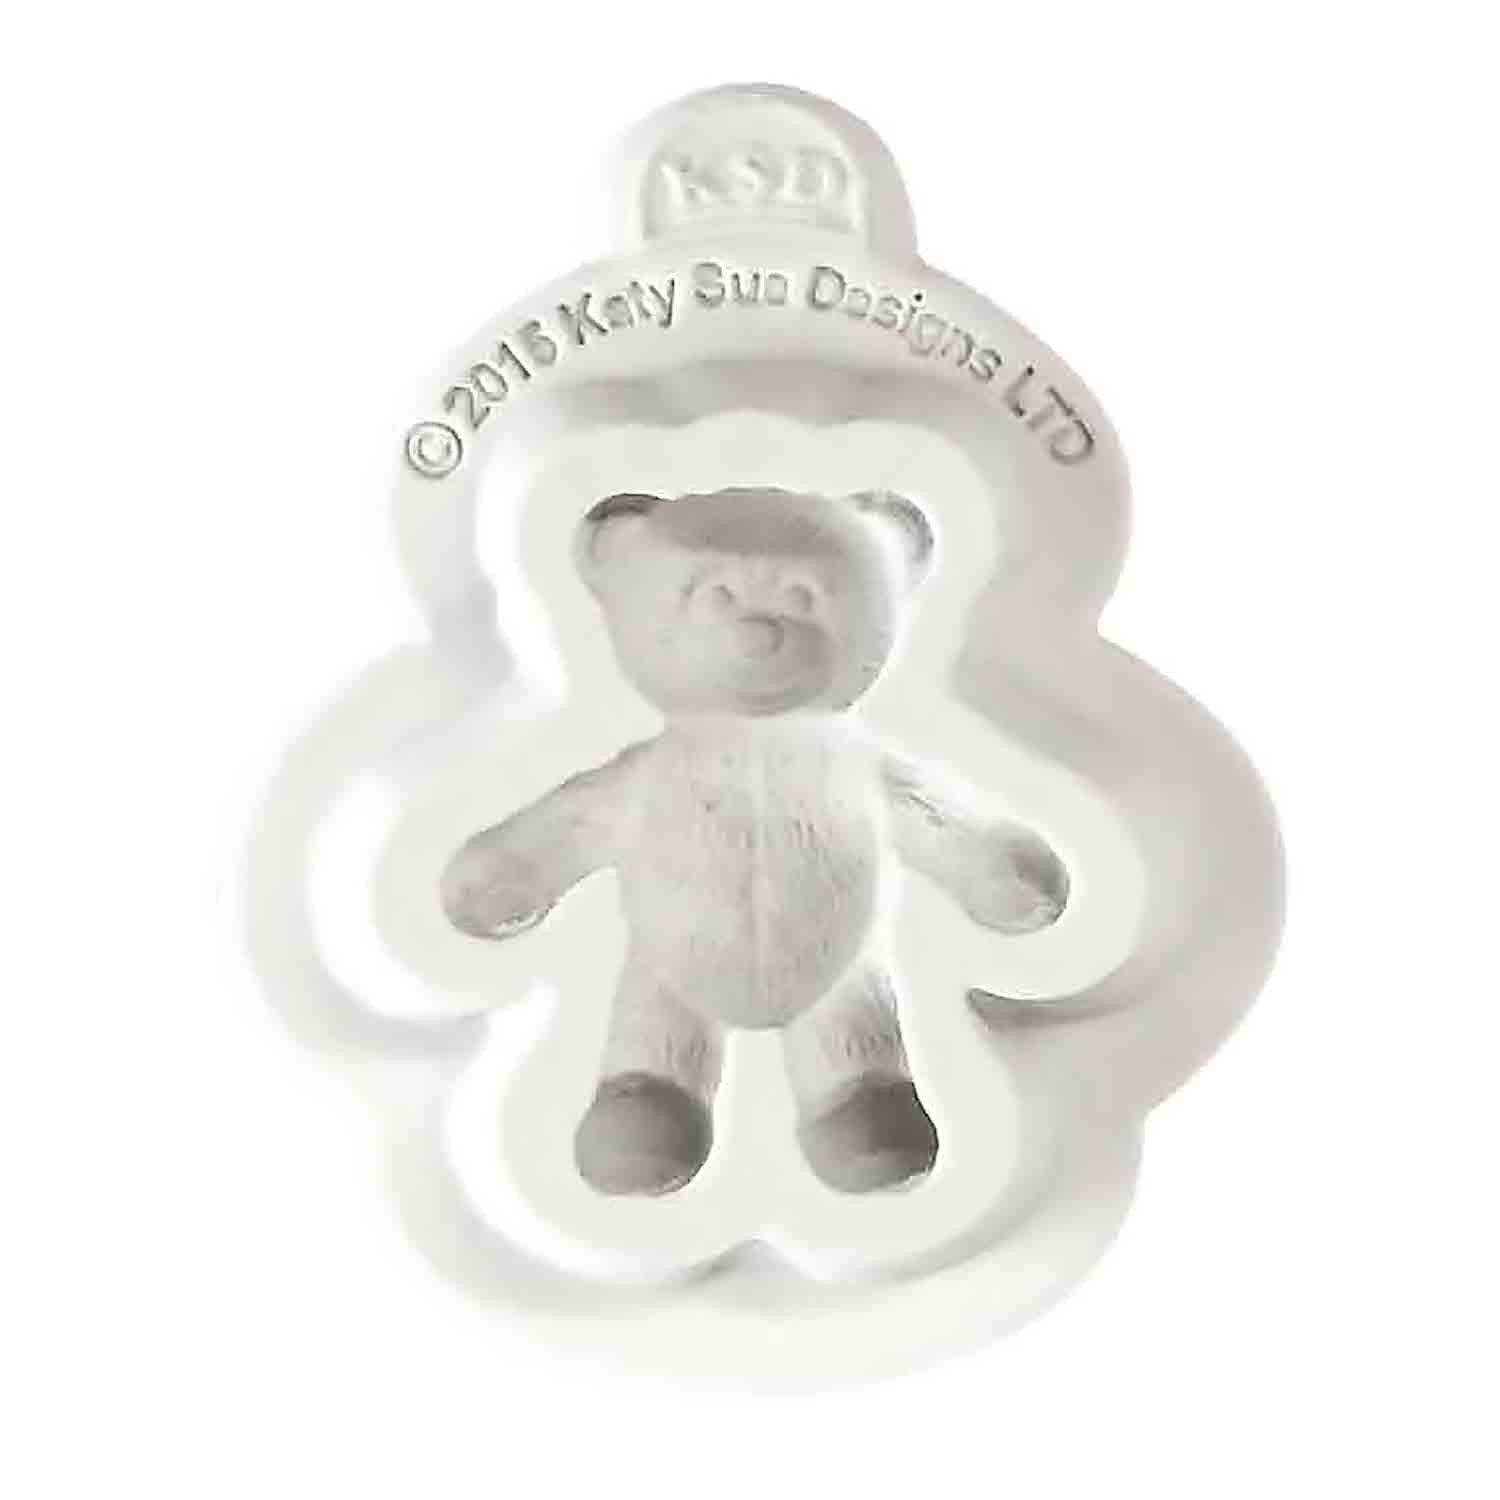 Baby Teddy Bear Silicone Mold